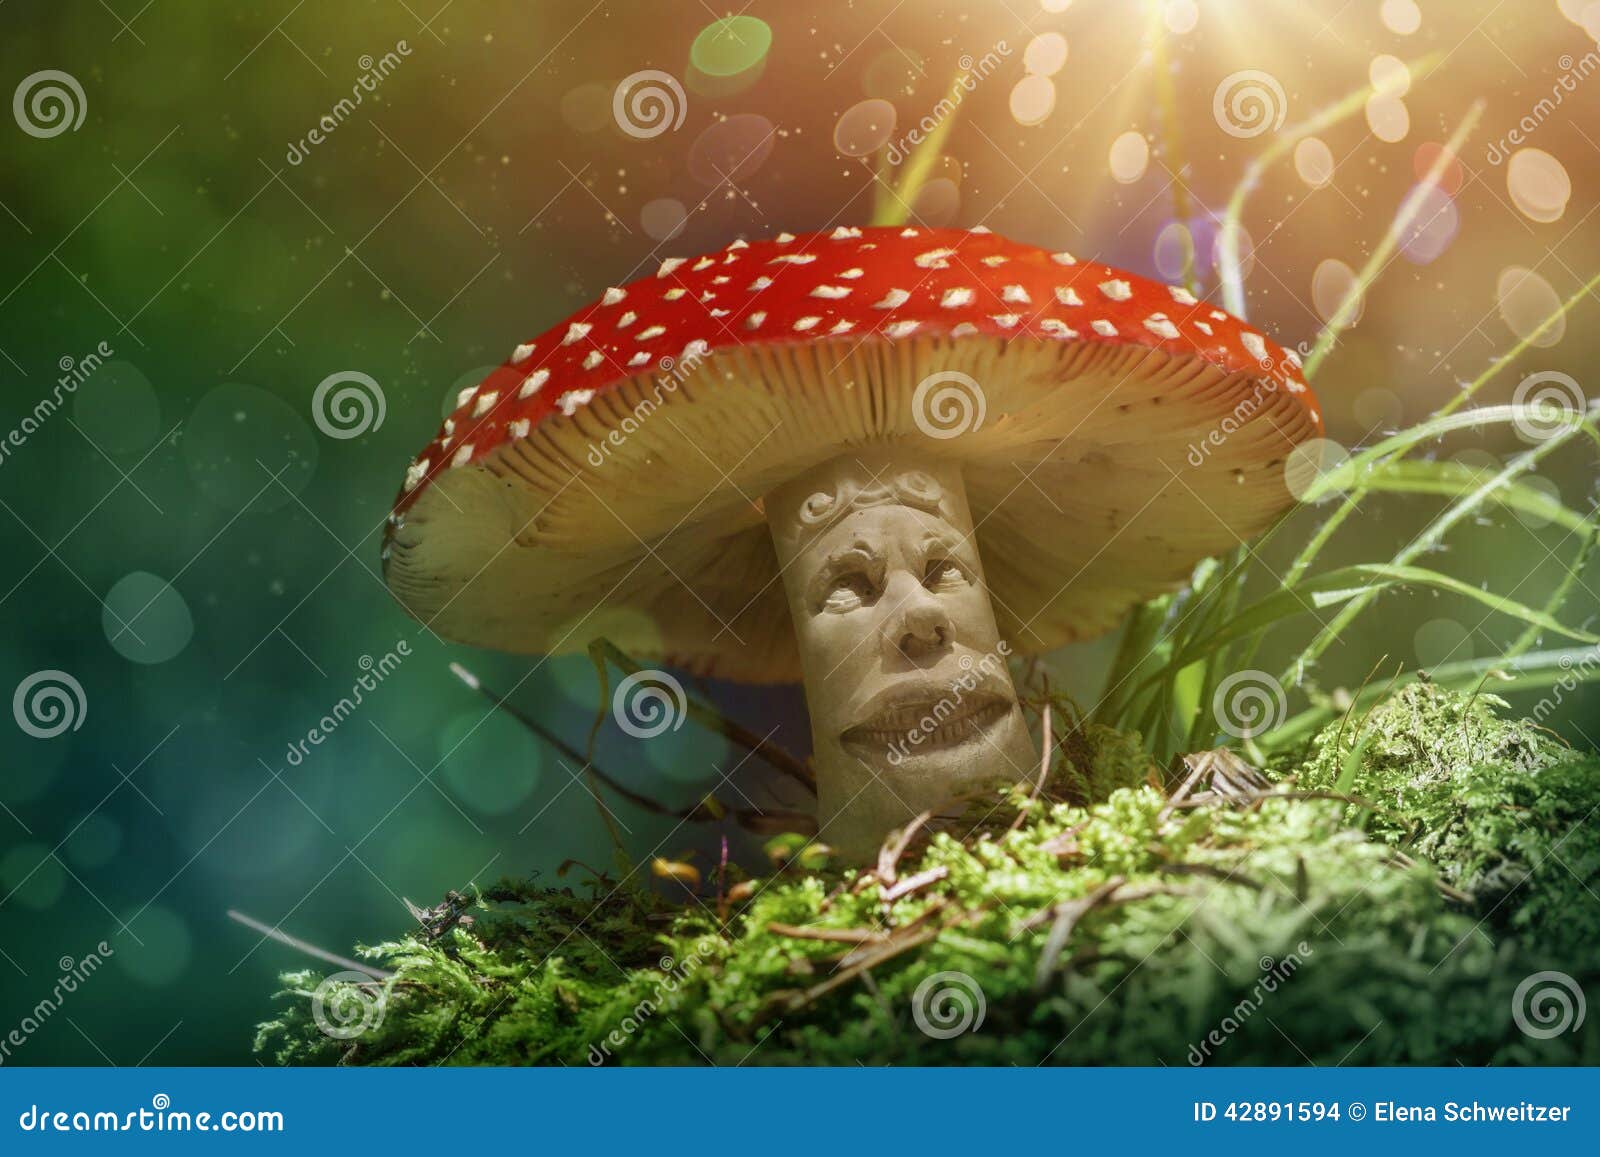 Fantasy Mushroom Stock Photo - Image: 42891594